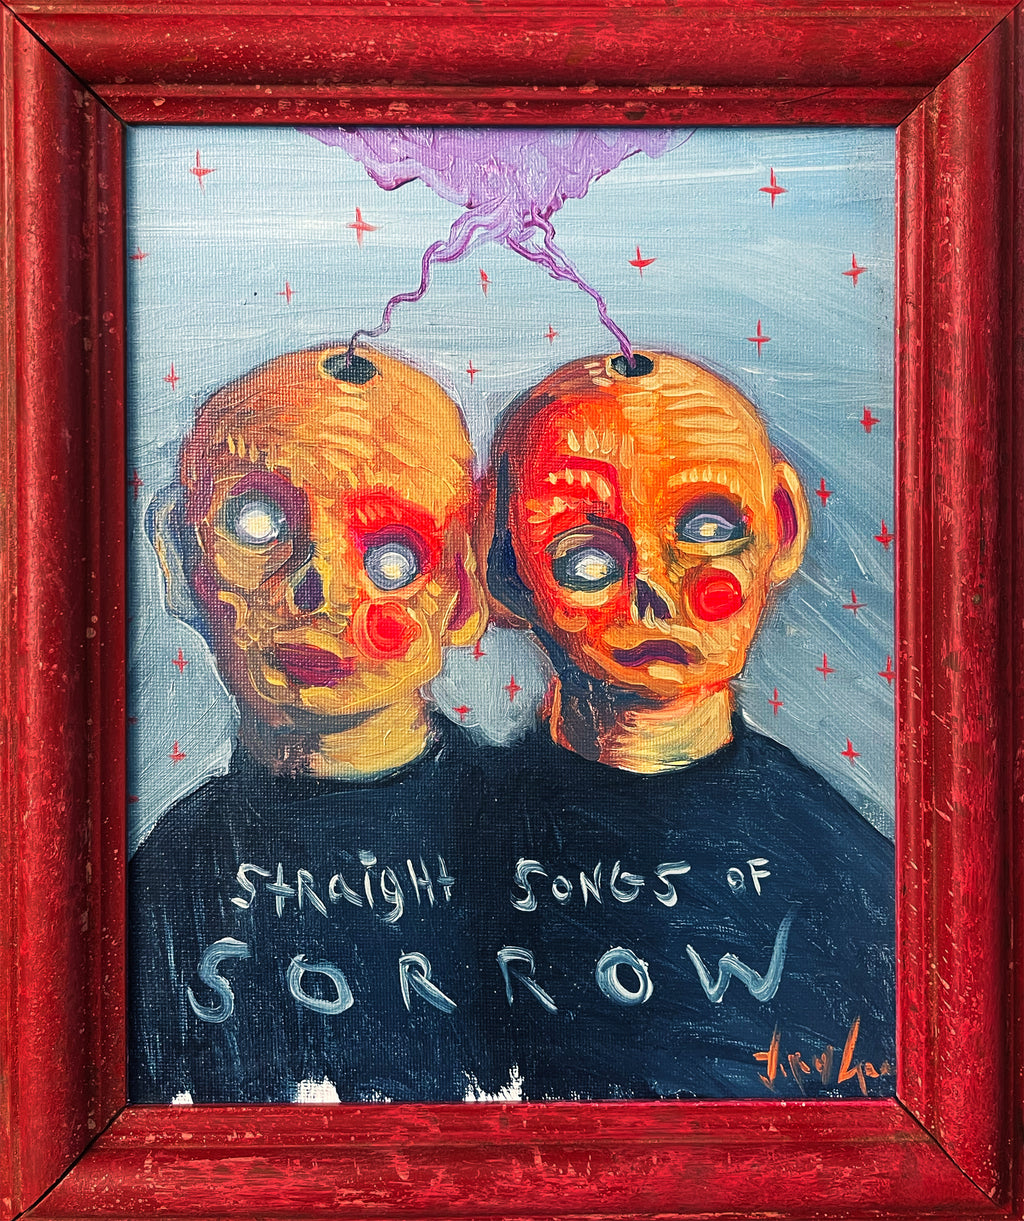 Straight Songs of Sorrow (Study)